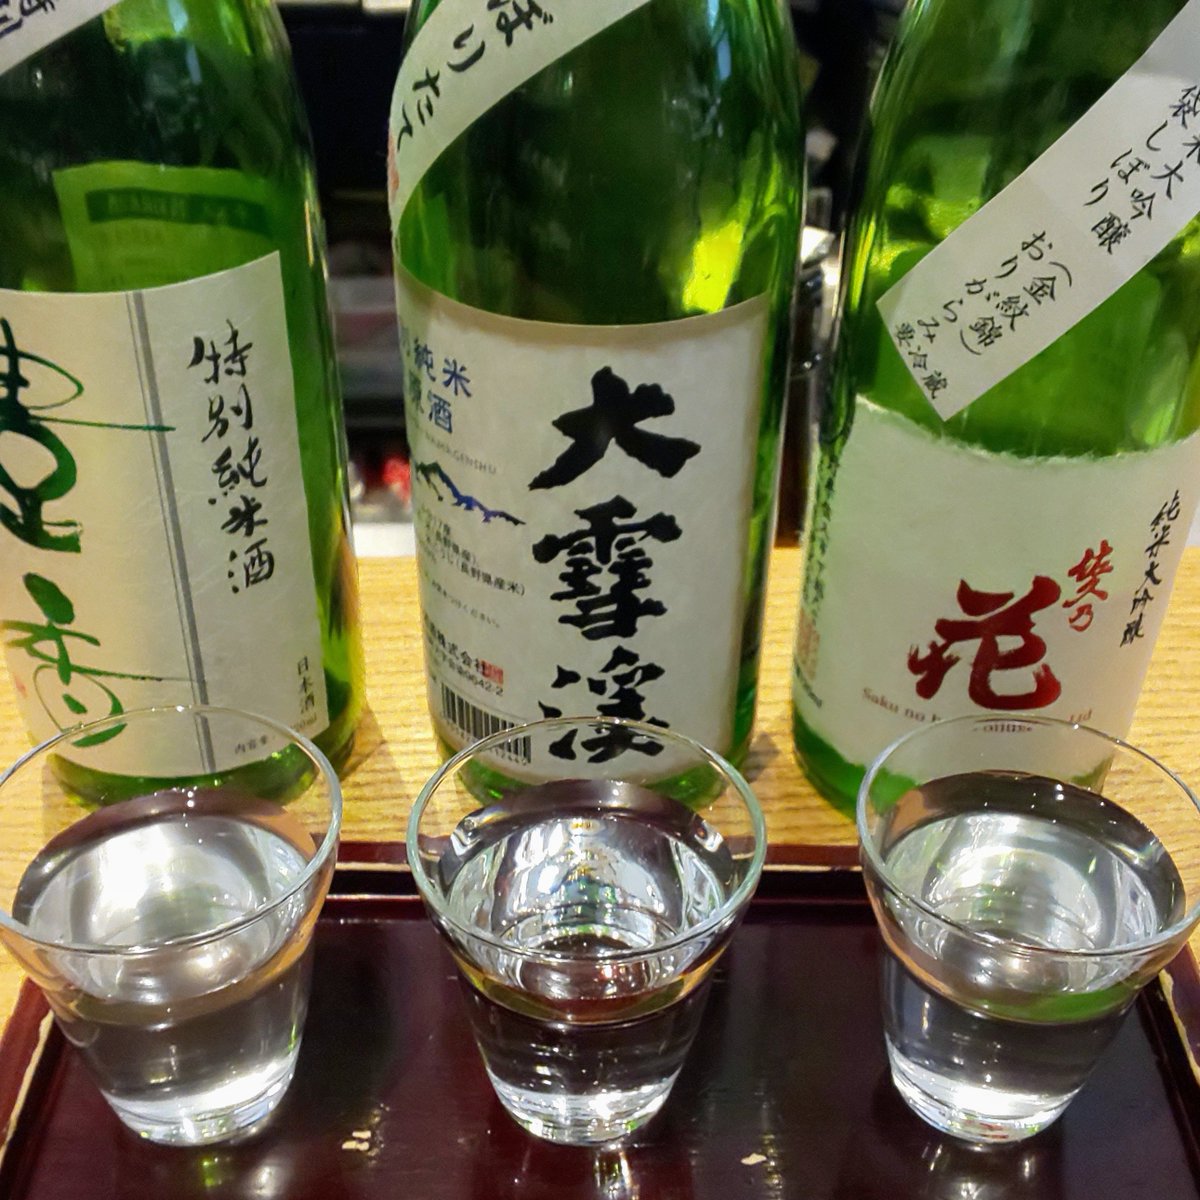 test ツイッターメディア - 銀座NAGANOで新酒の3種飲み比べ "佐久の花" "大雪渓" "豊香" どれもよきデシタ☺️ https://t.co/ZPsITQ8rtm